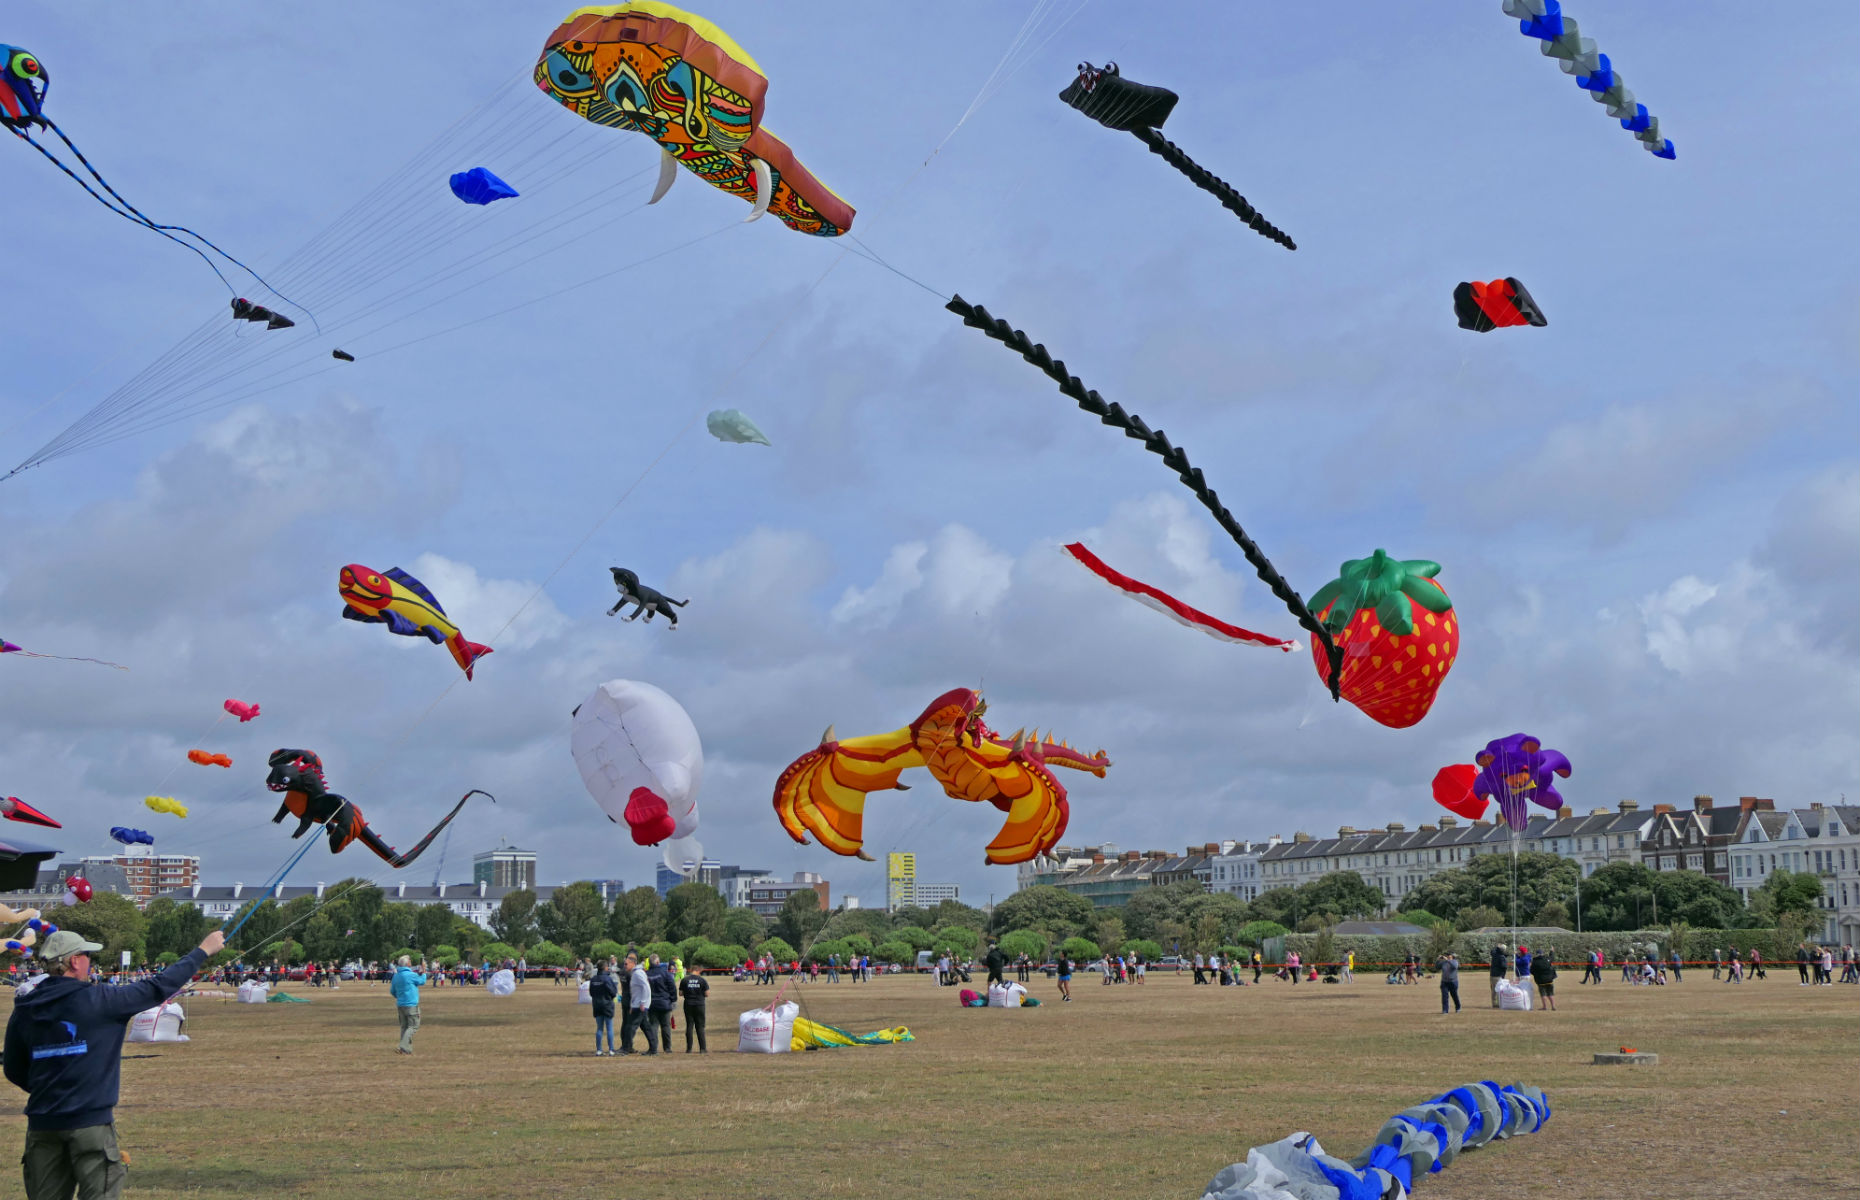 Kite festival in Portsmouth (Image: D O-P Photography/Shutterstock)